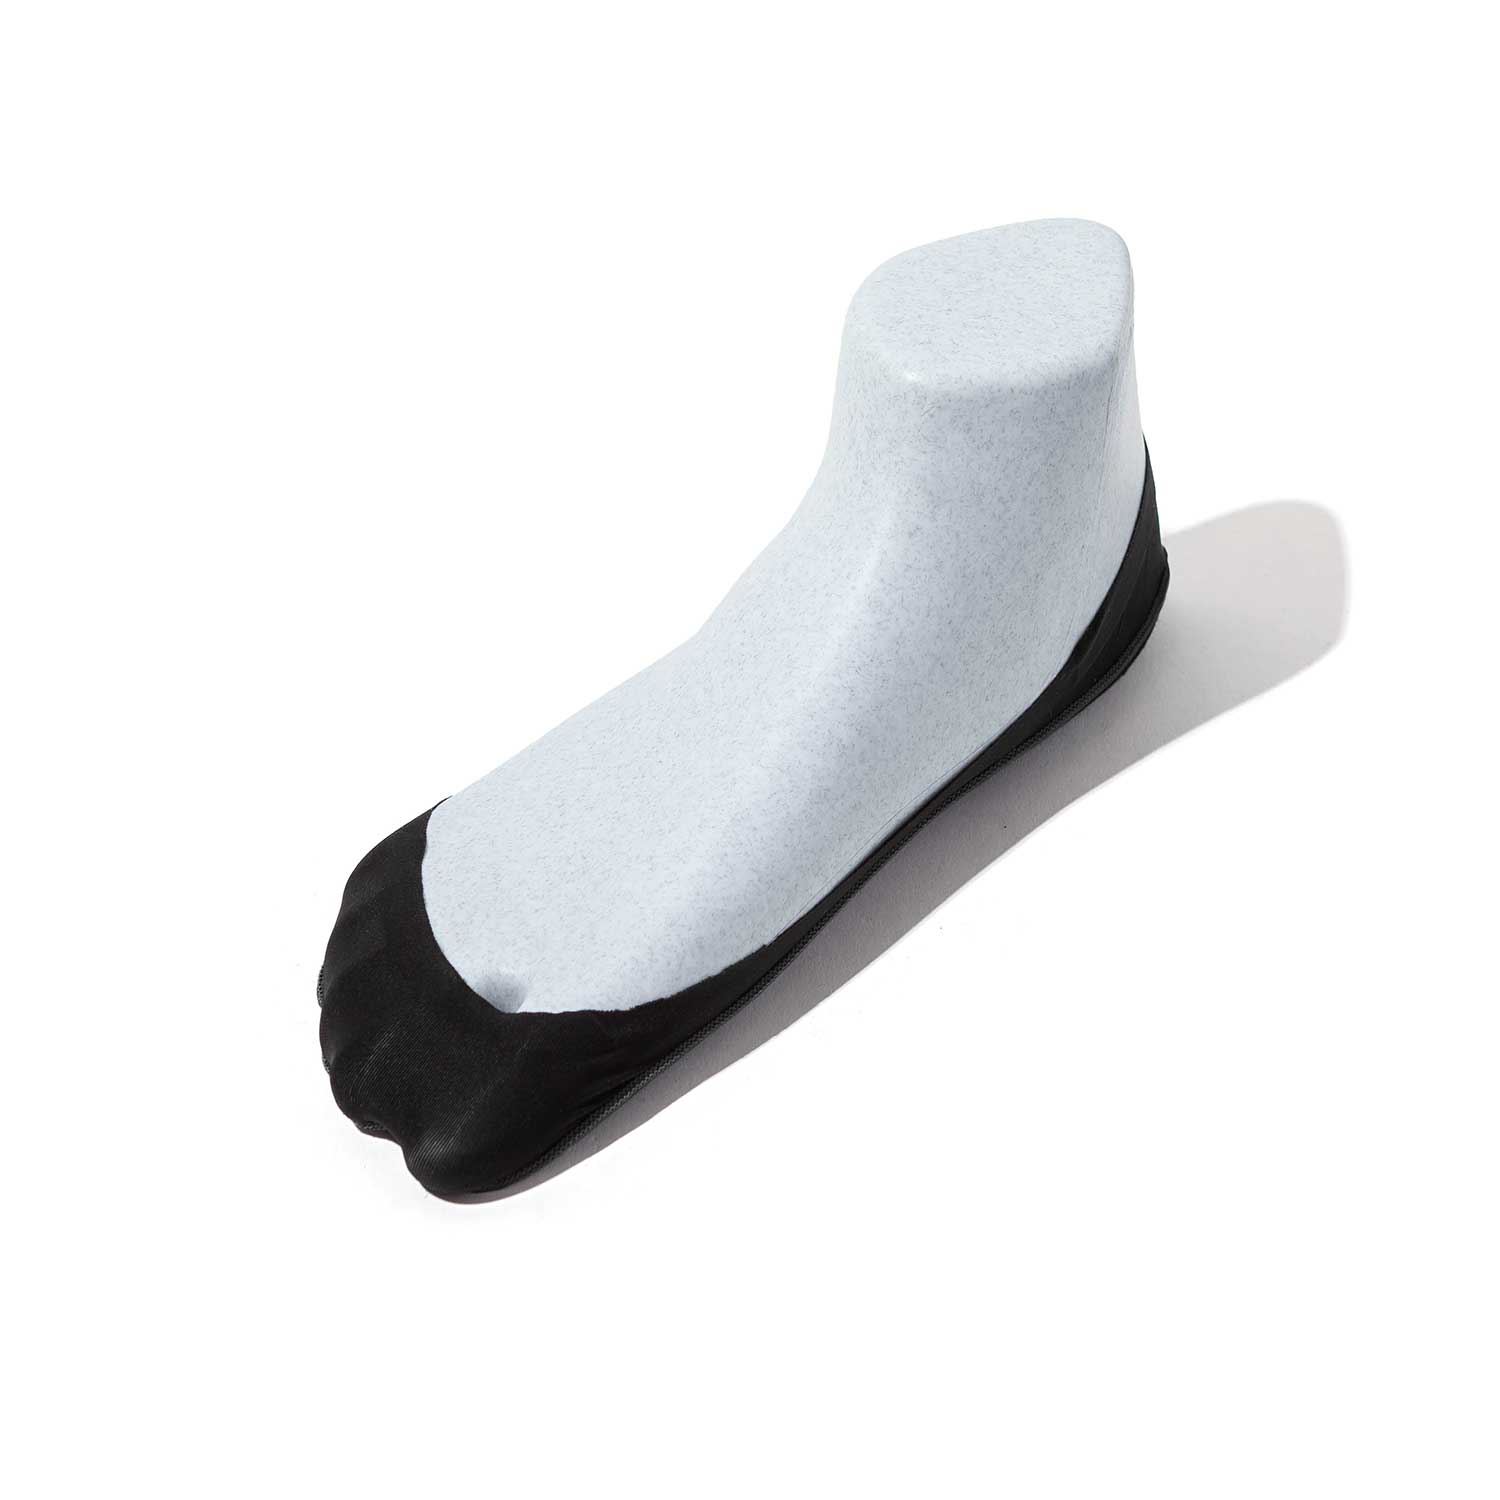 Women's short oval patterned socks with needle drop in fresh